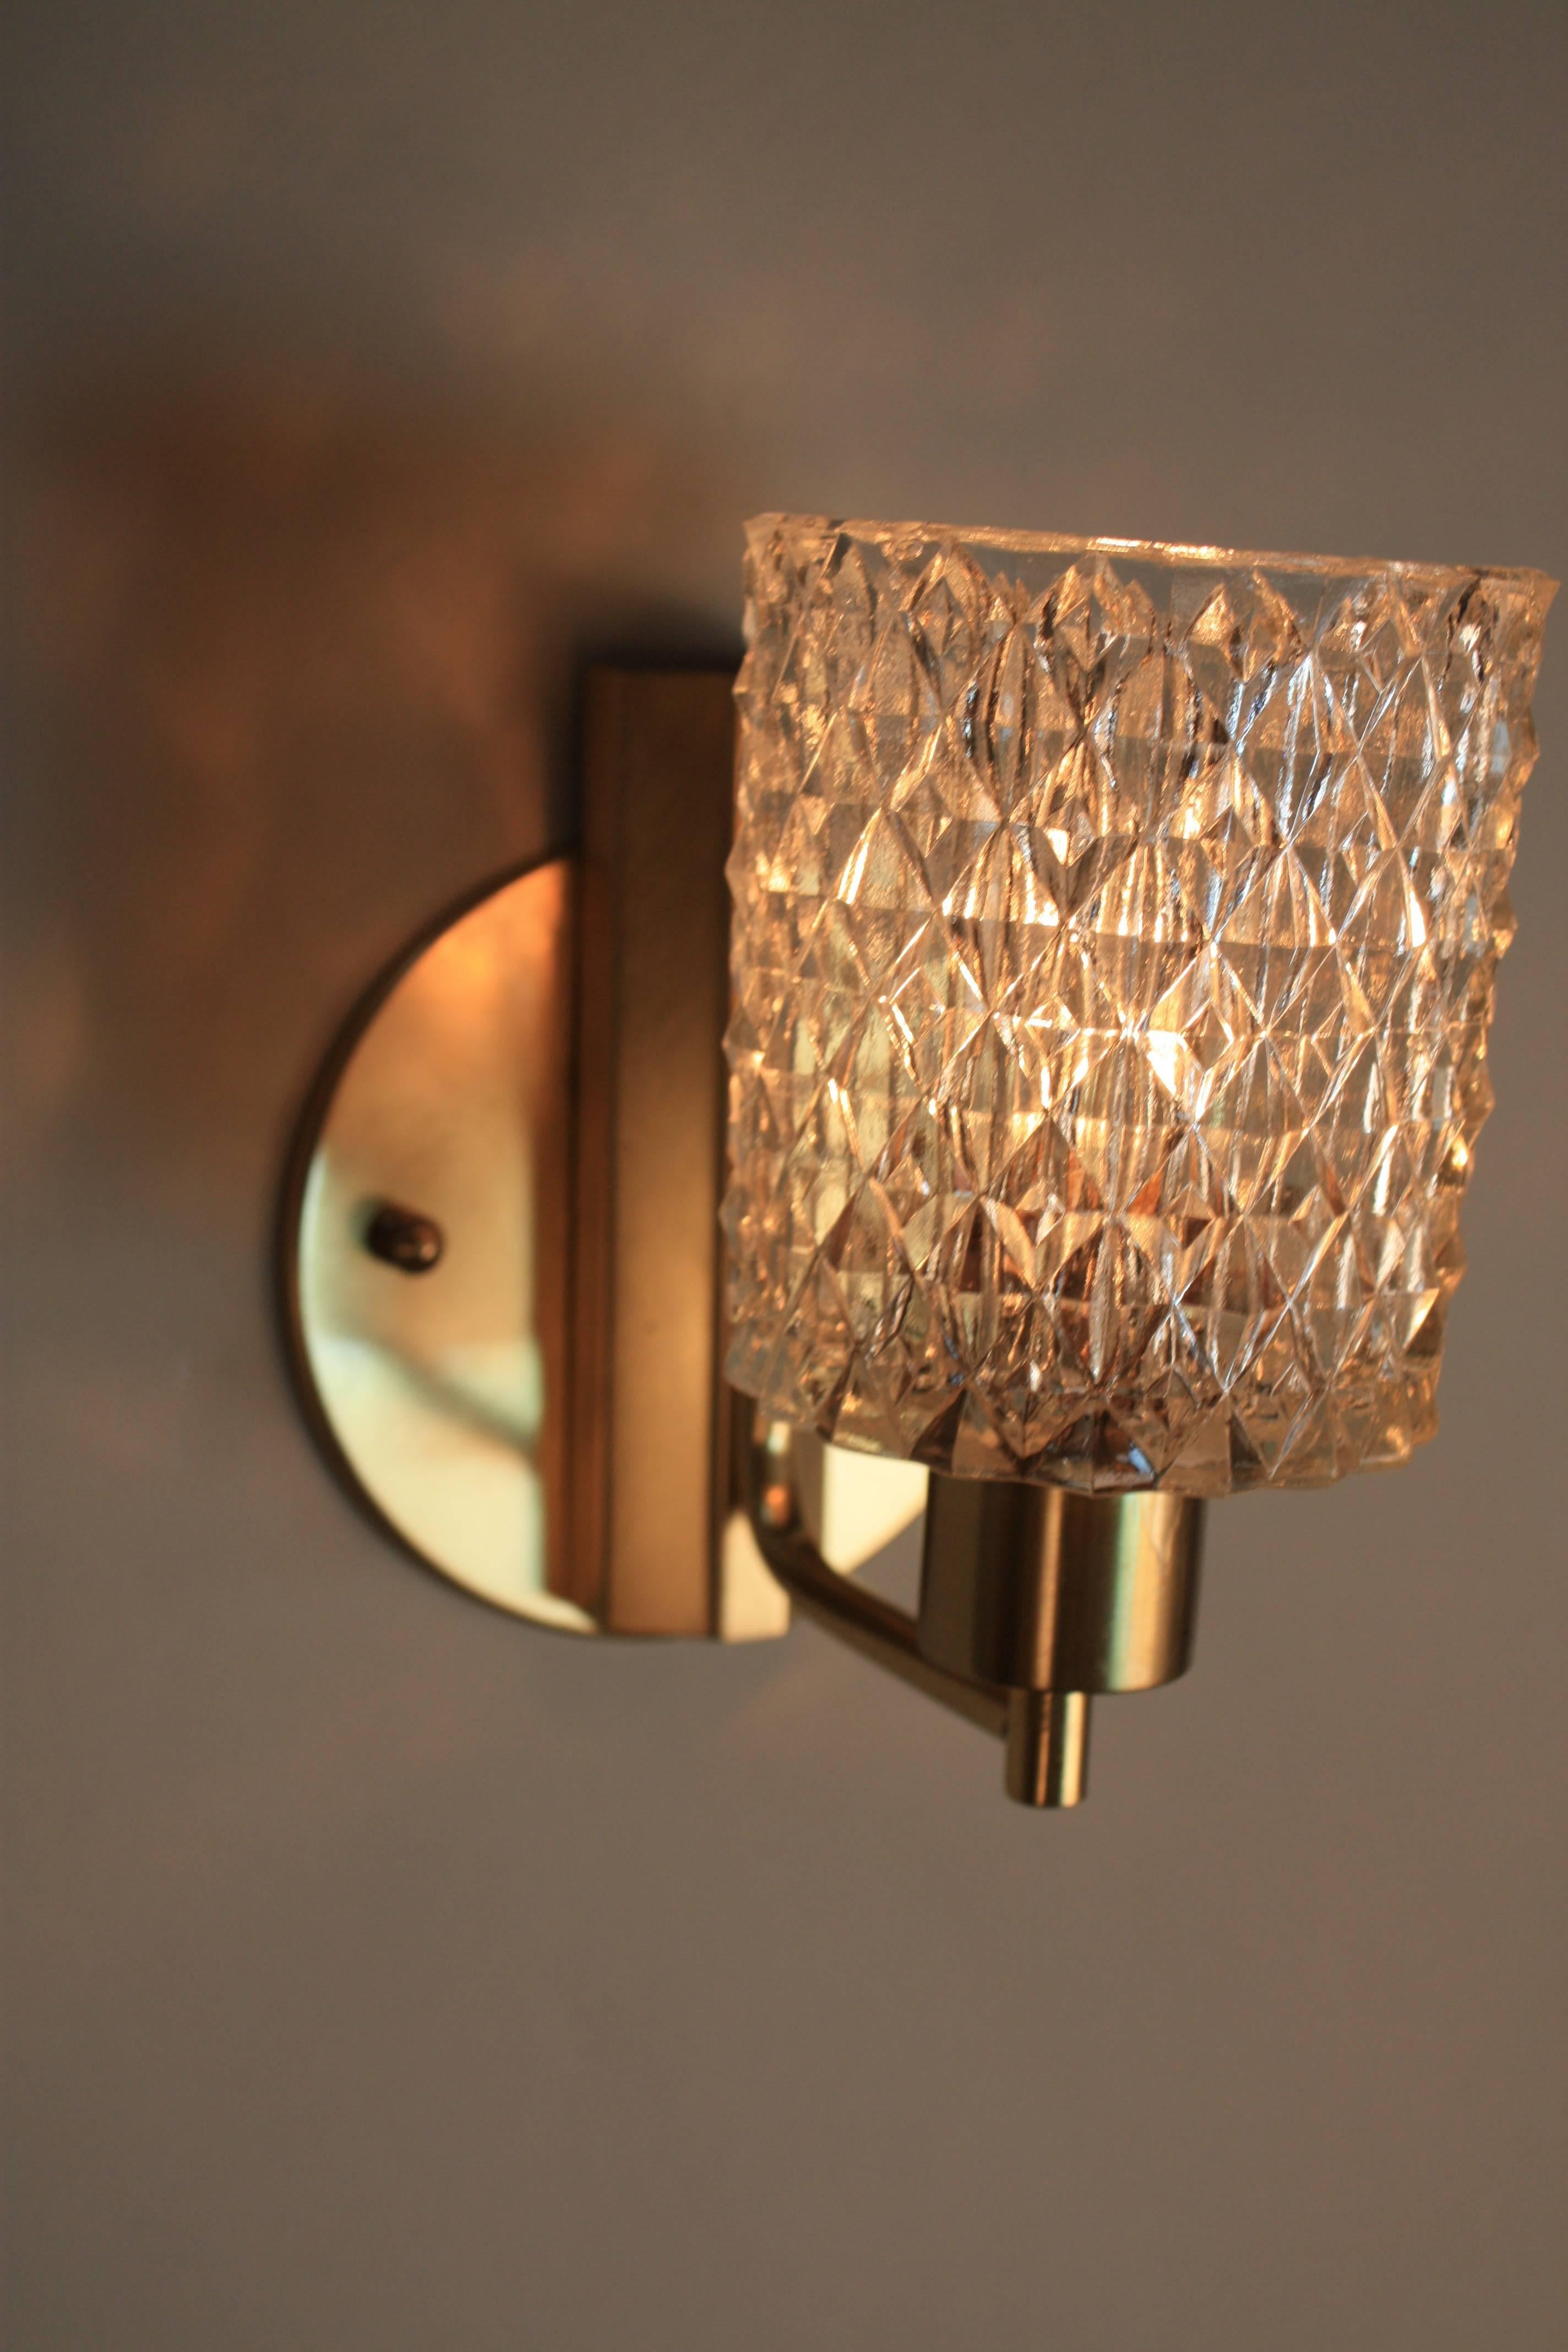 Simple design but elegant, single light 1970s glass and bronze Italian wall sconces.